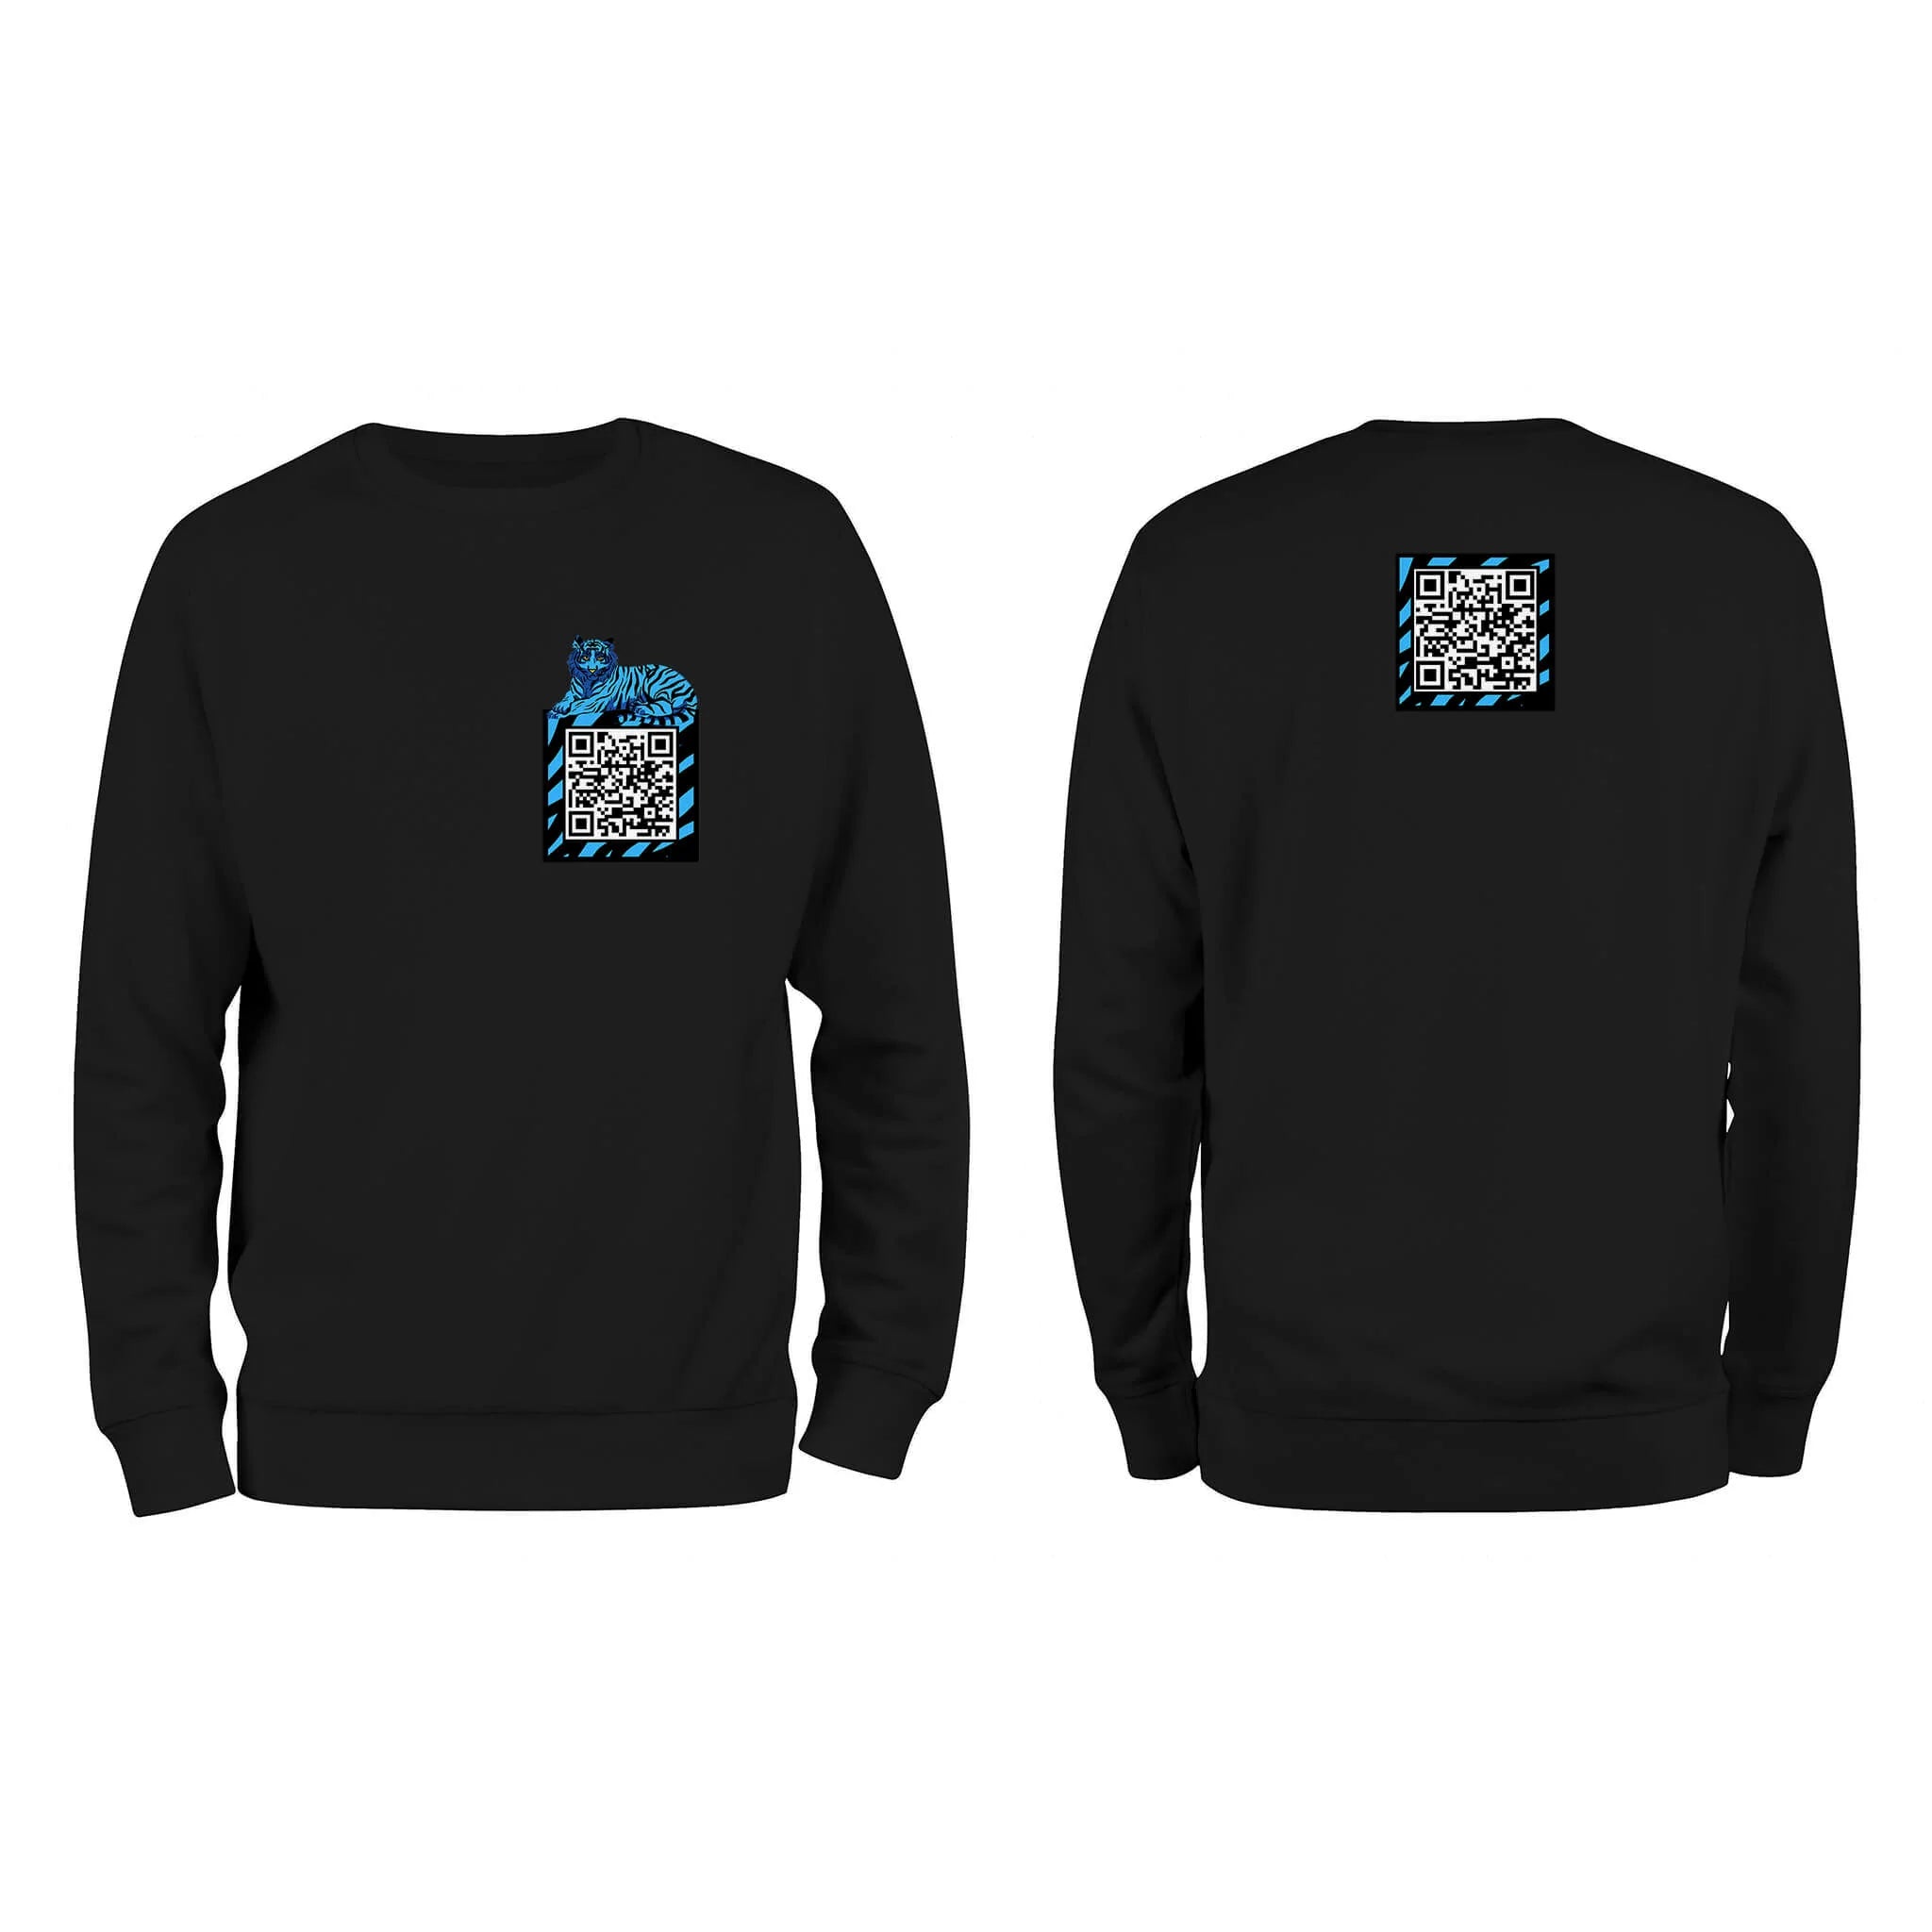 Black QR Sweatshirt from RESHRD Savannah collection with Front & Back Black & Light Blue design